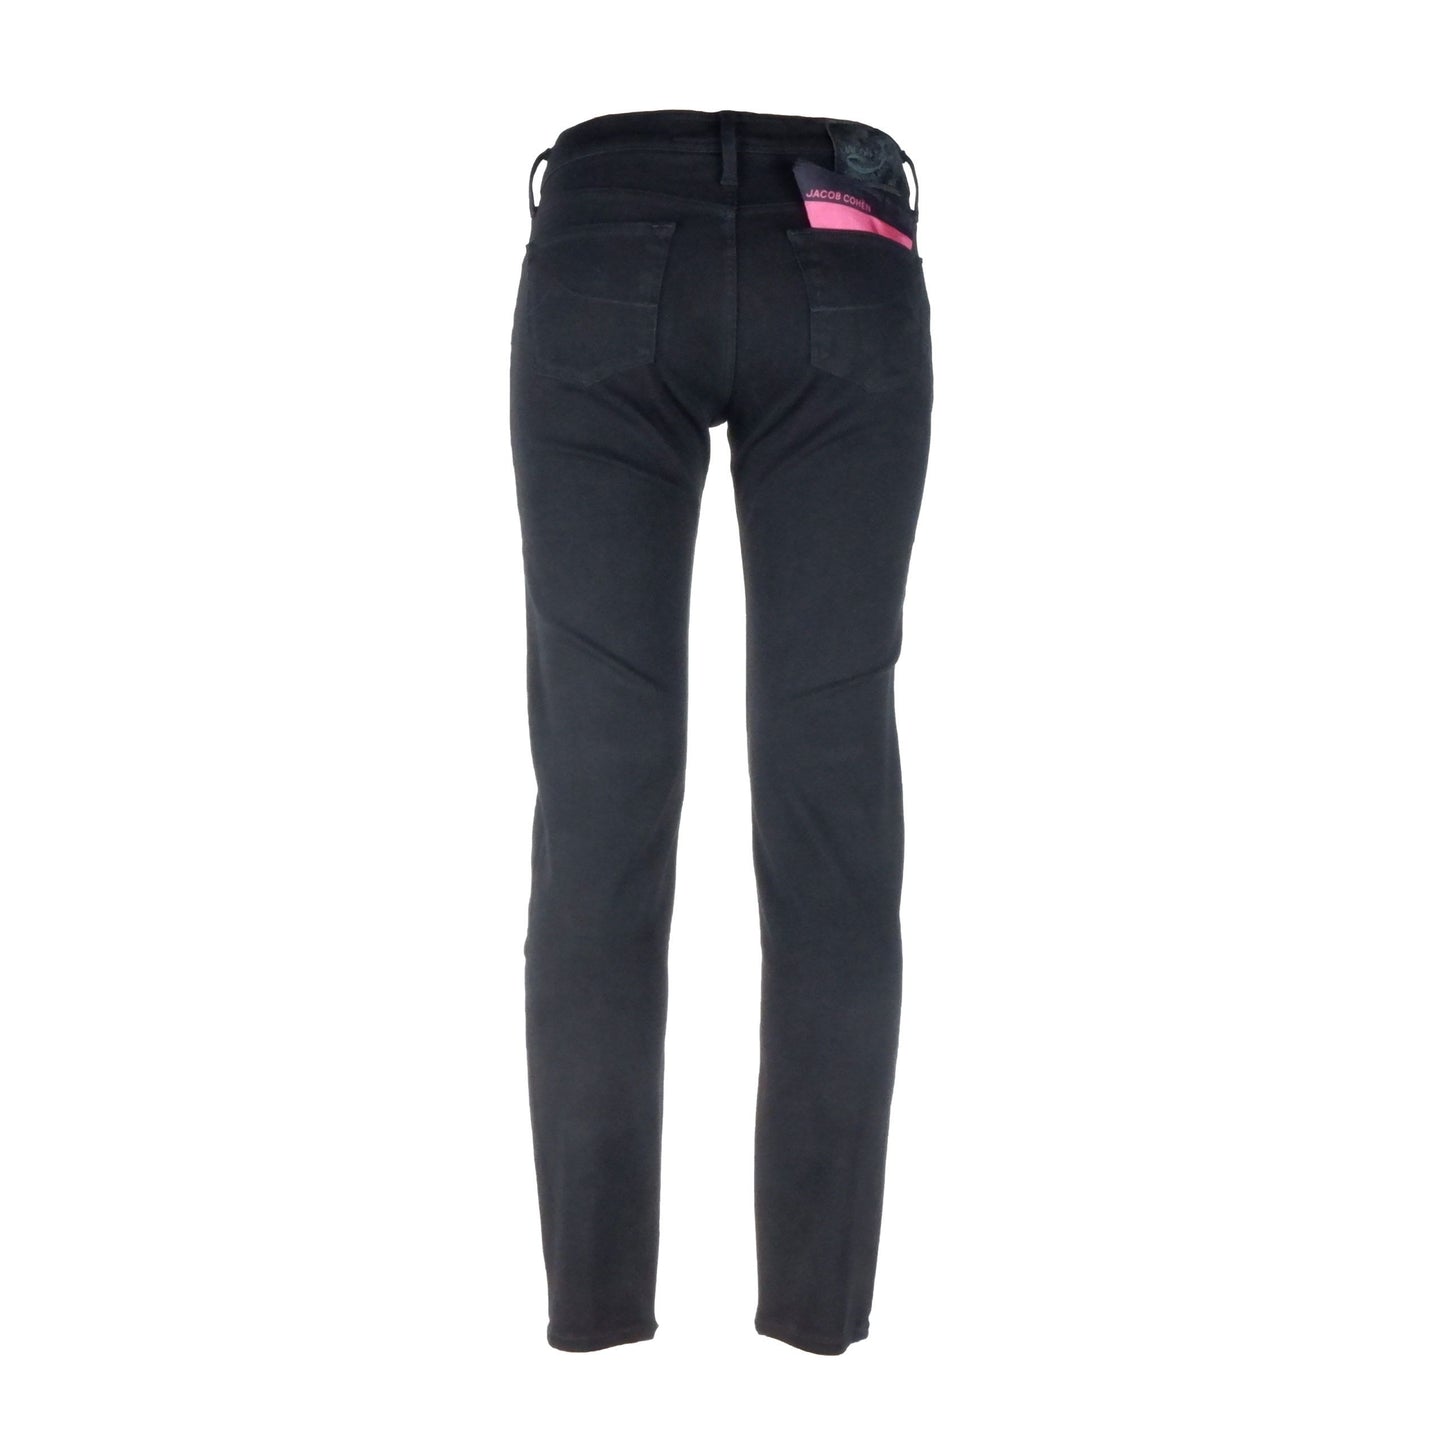 Sleek Black Slim-Fit Kimberly Jeans